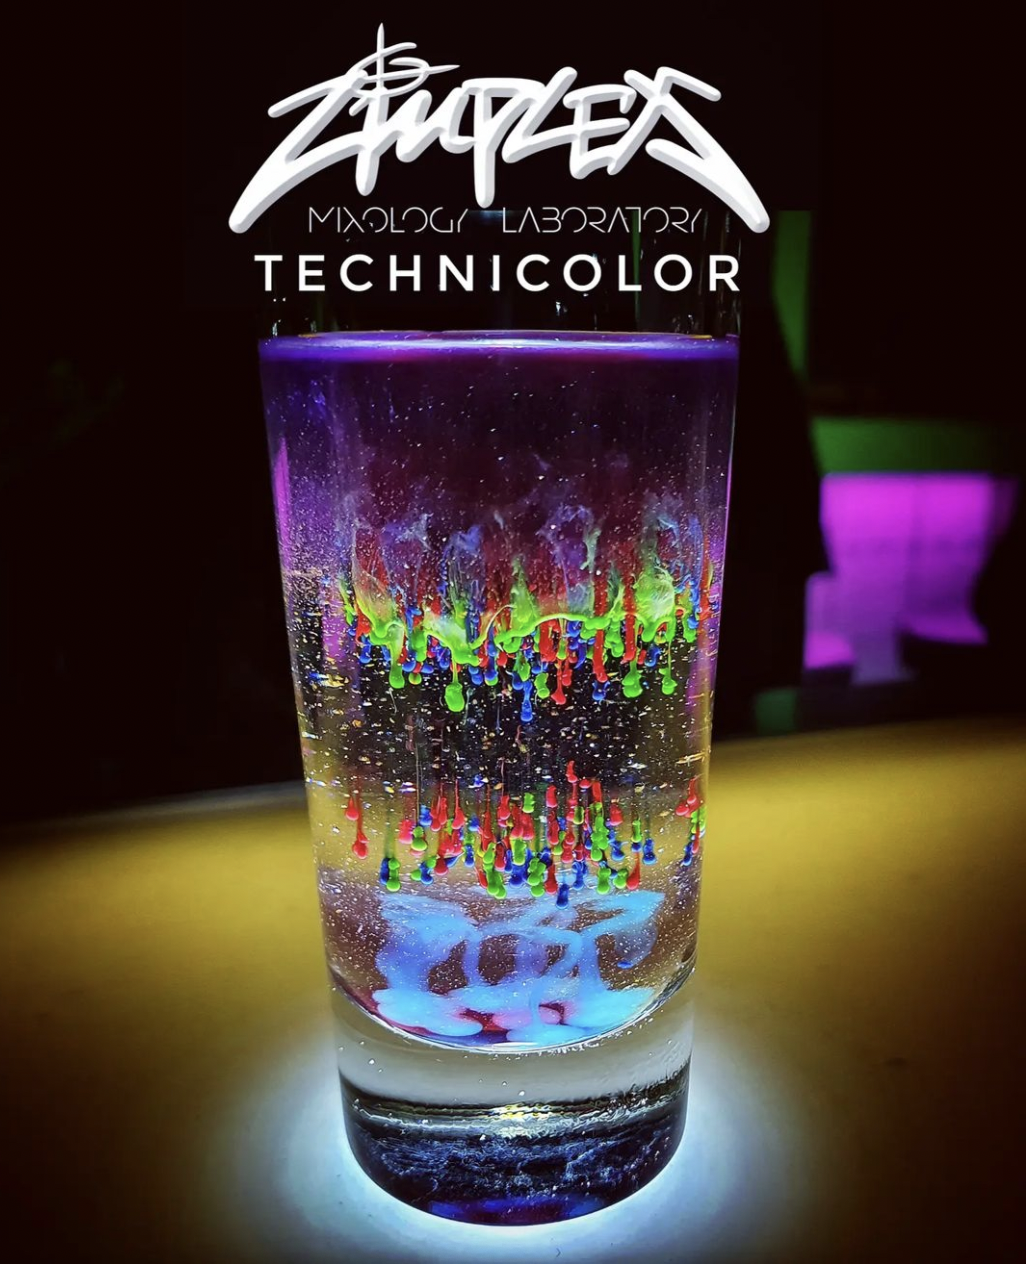 Z1mplex Mixology Laboratory - Technicolor